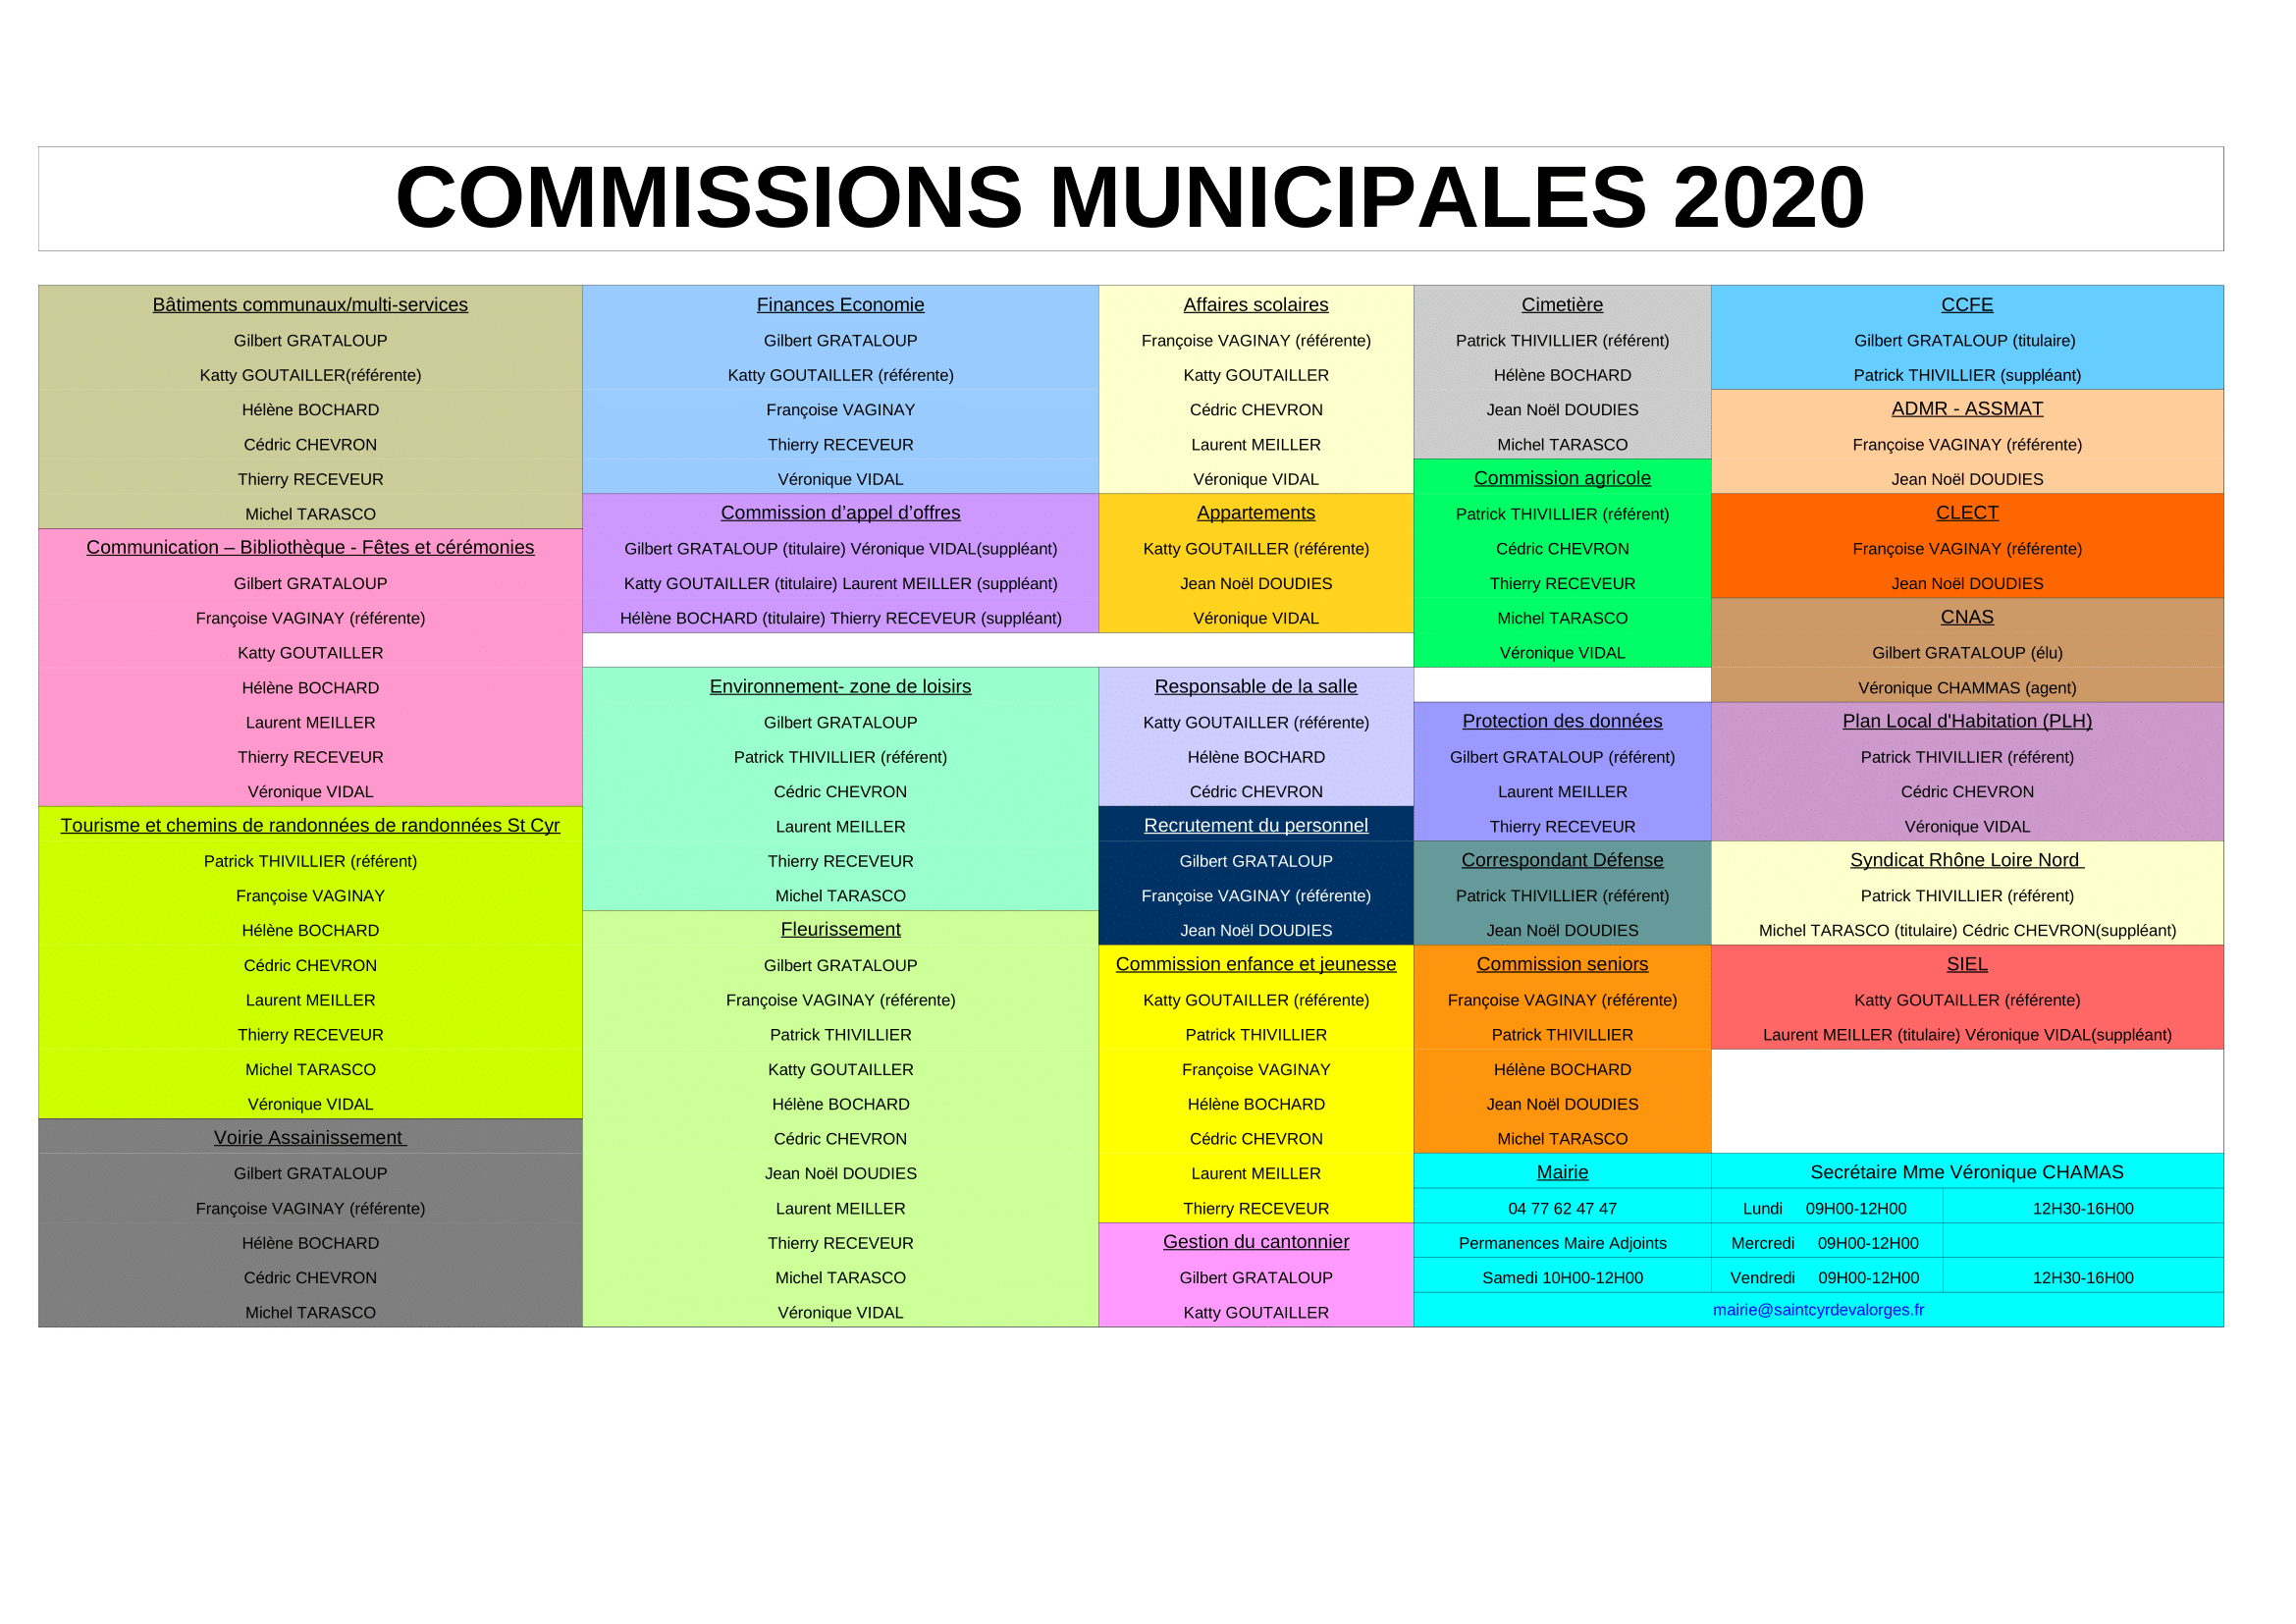 TABLEAU COMMISSIONS MUNICIPALES 2020 1